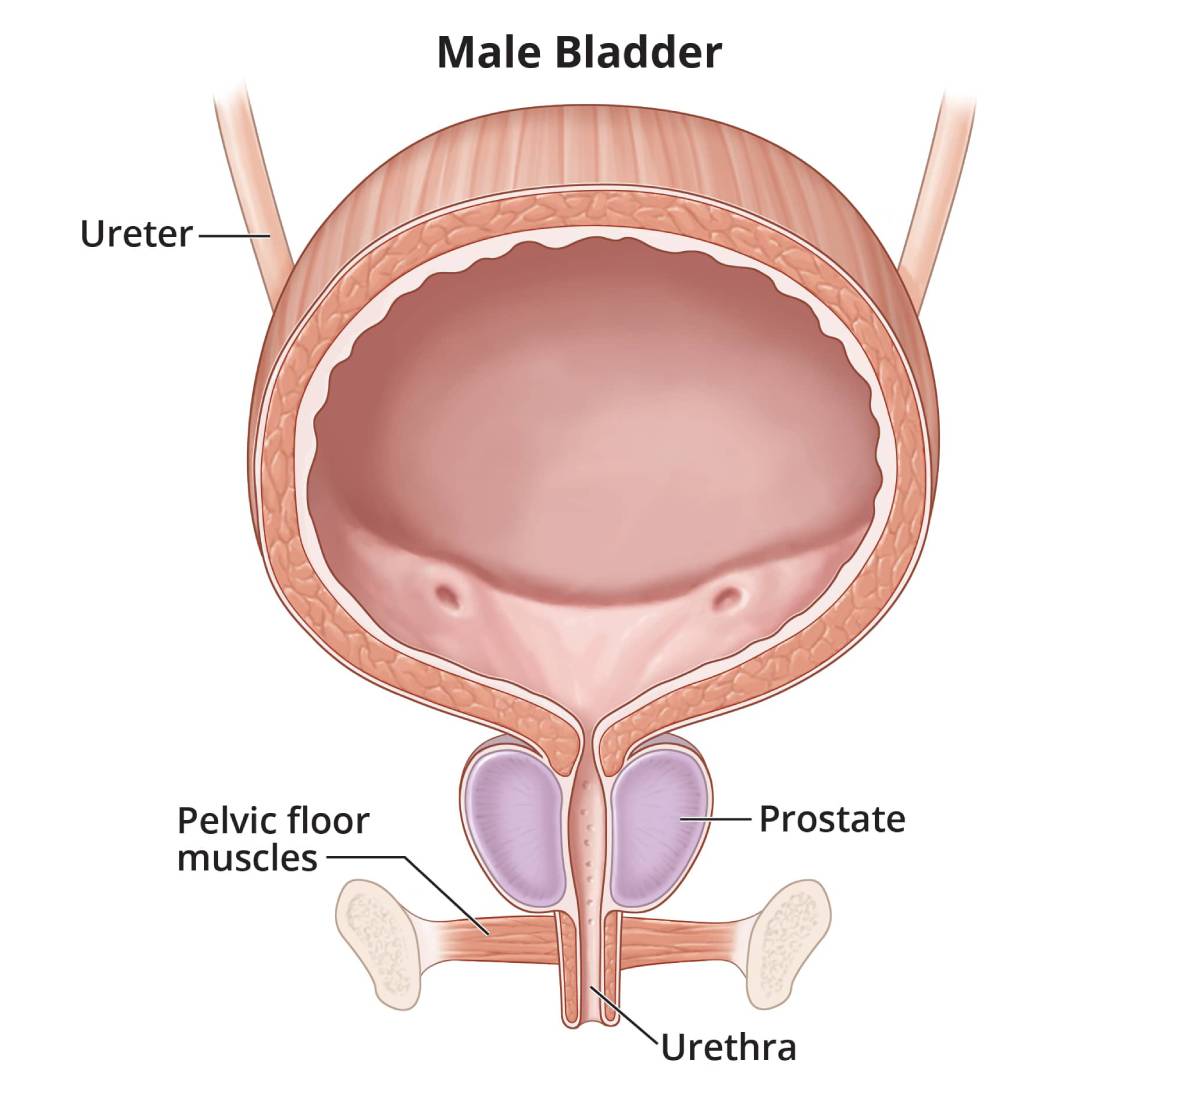 Symptoms & Causes of Bladder Control Problems (Urinary